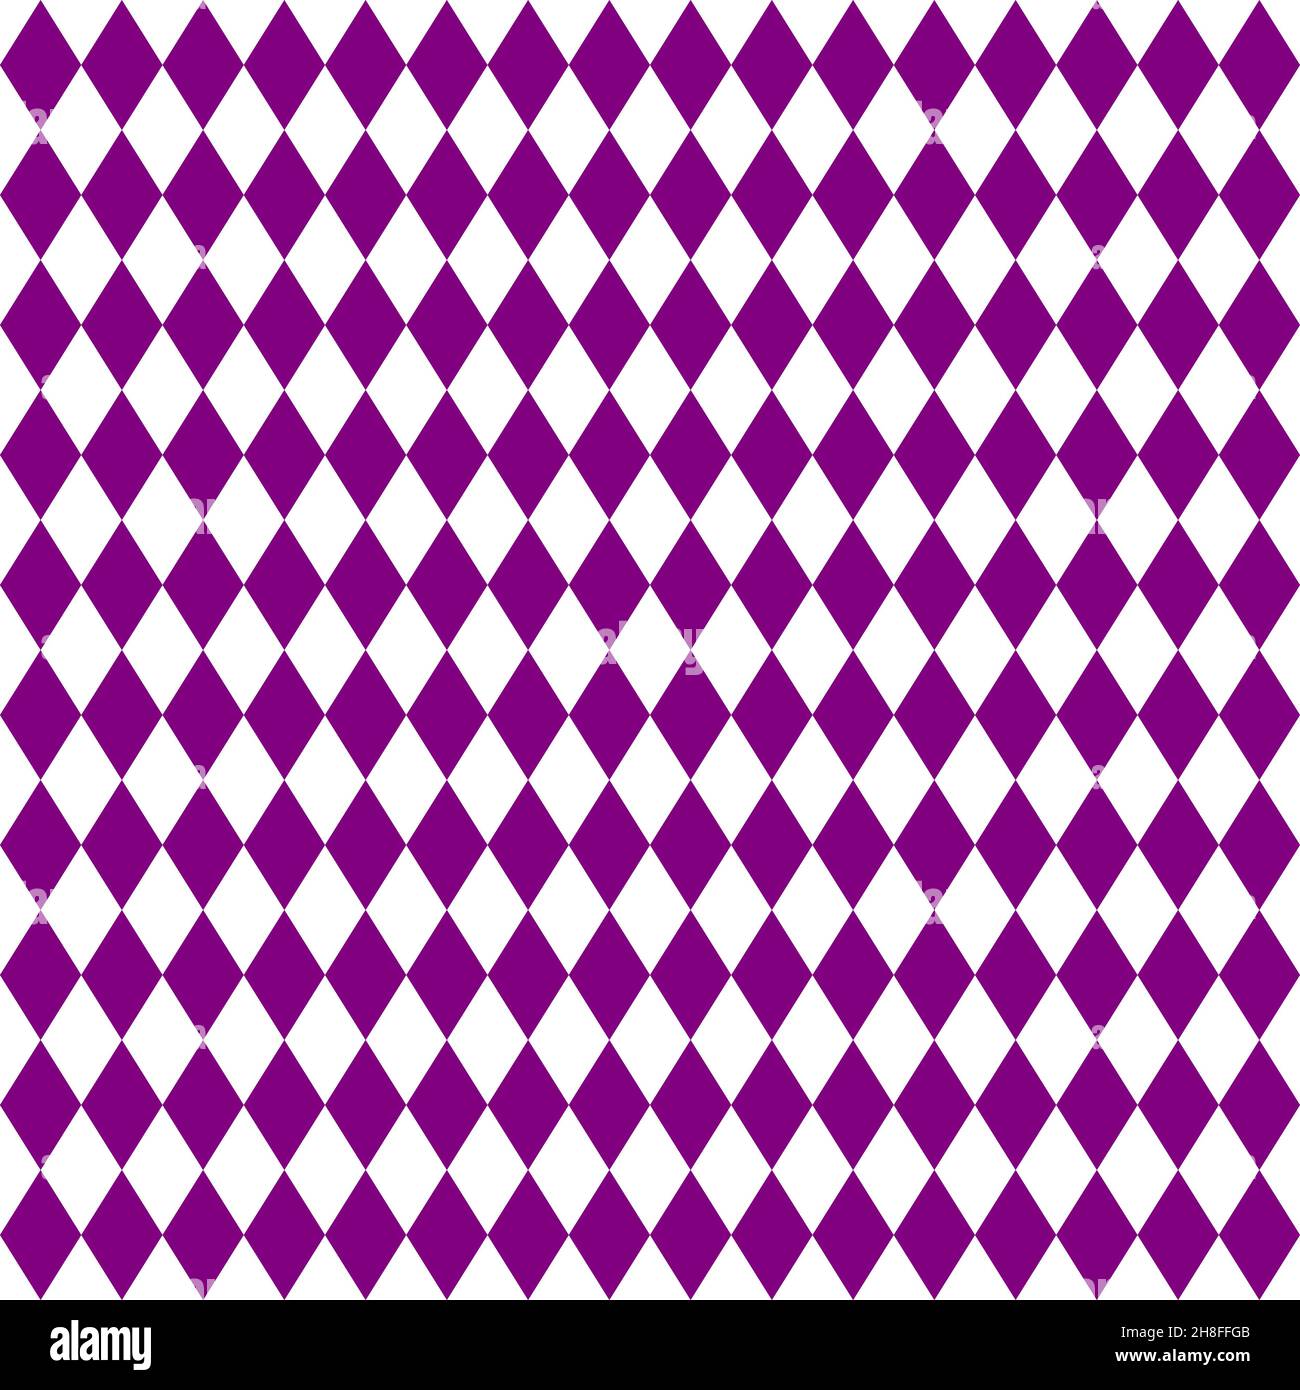 Argyle pattern seamless background. Vector illustration. Stock Vector